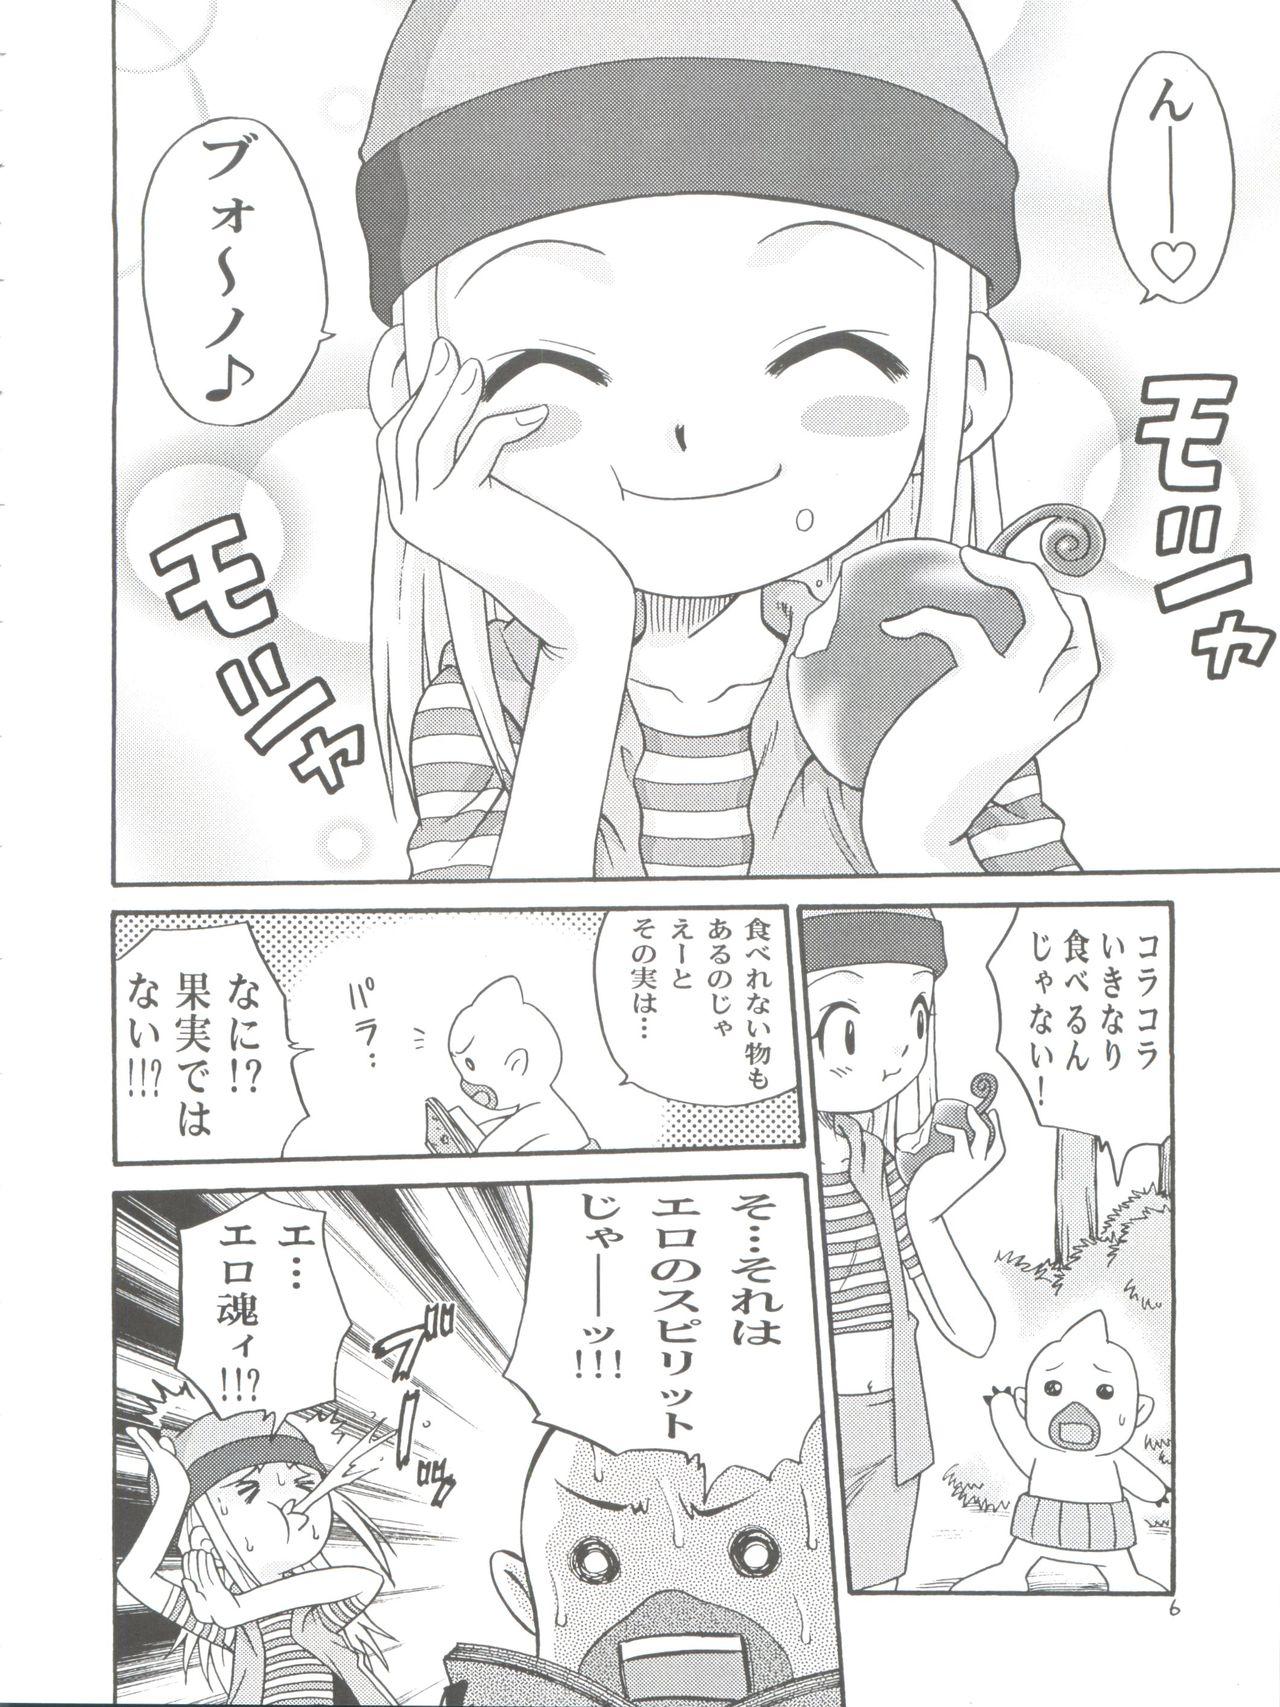 Twerking Izumin - Digimon frontier Bang Bros - Page 6